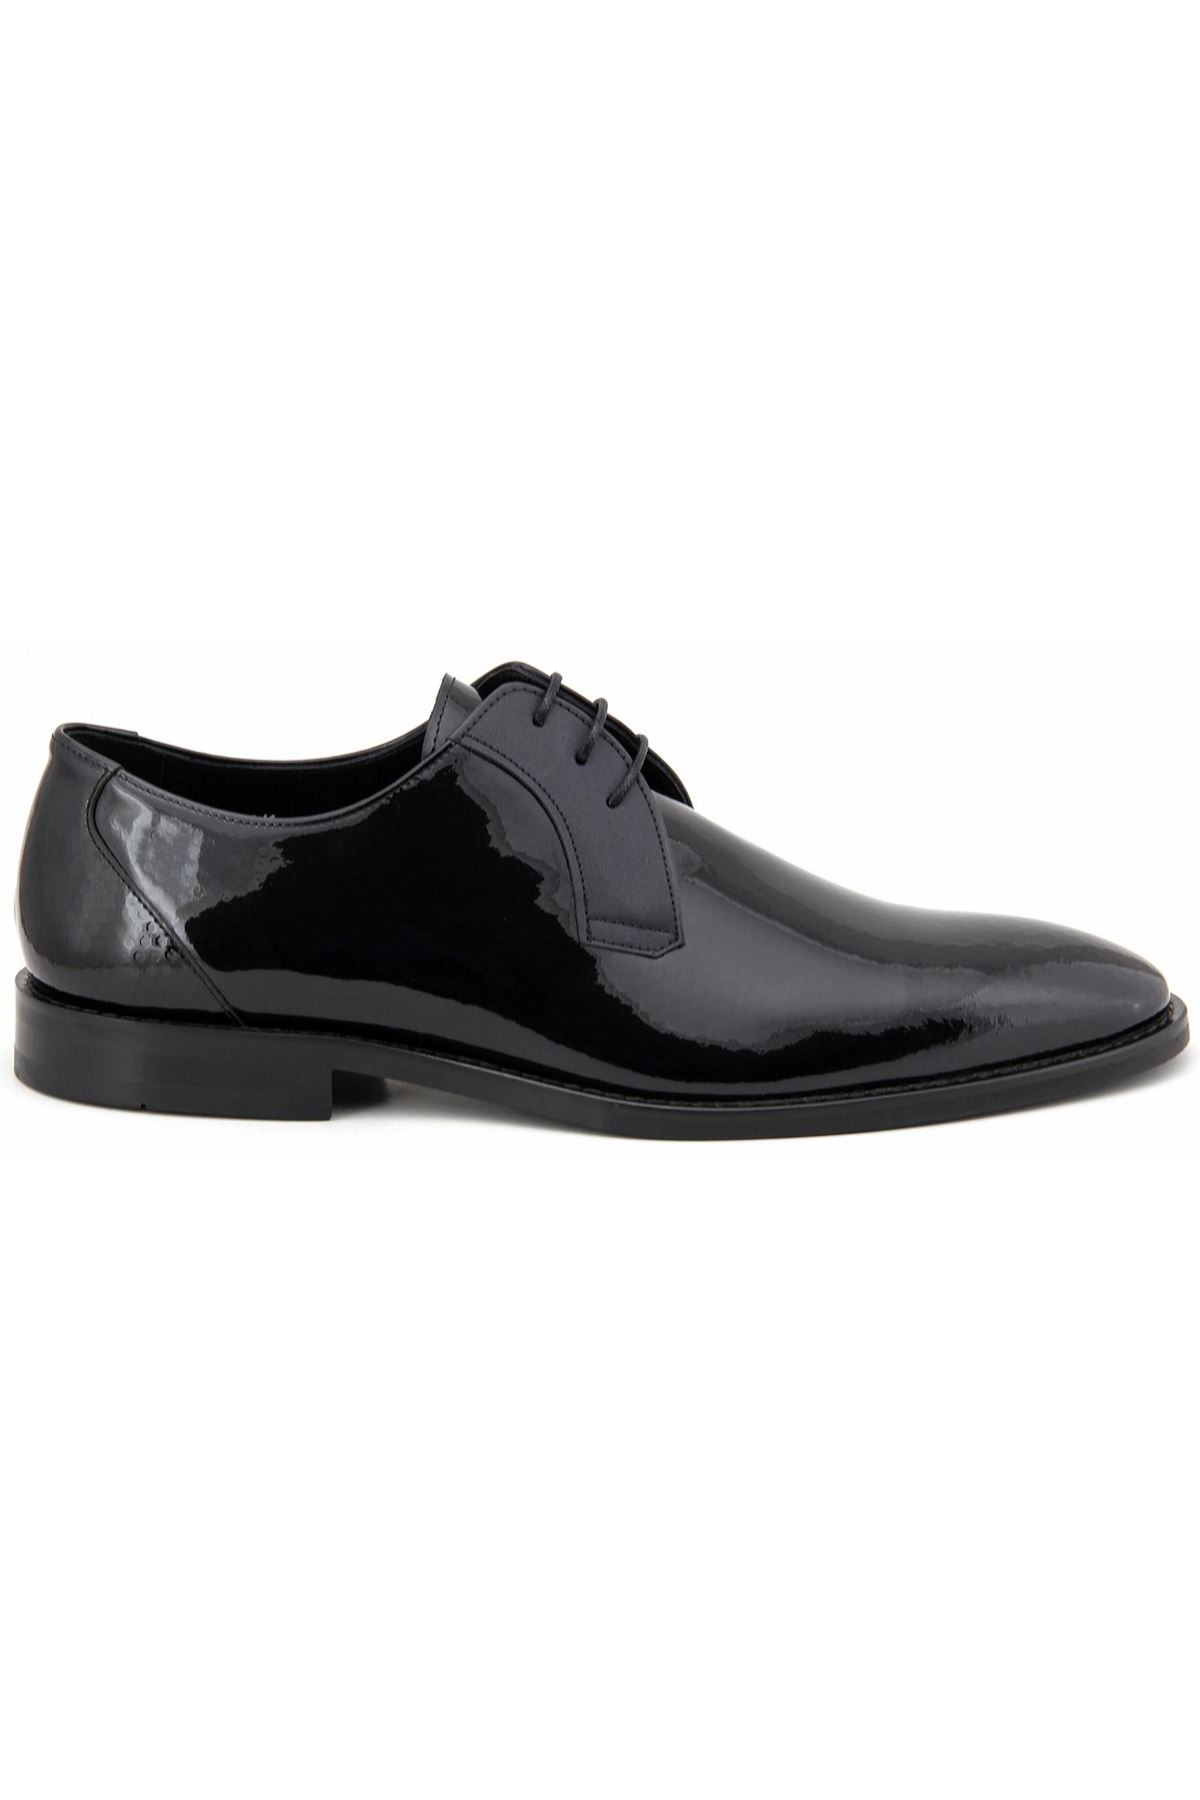 2724 Libero Klasik Erkek Ayakkabı - Siyah Rugan